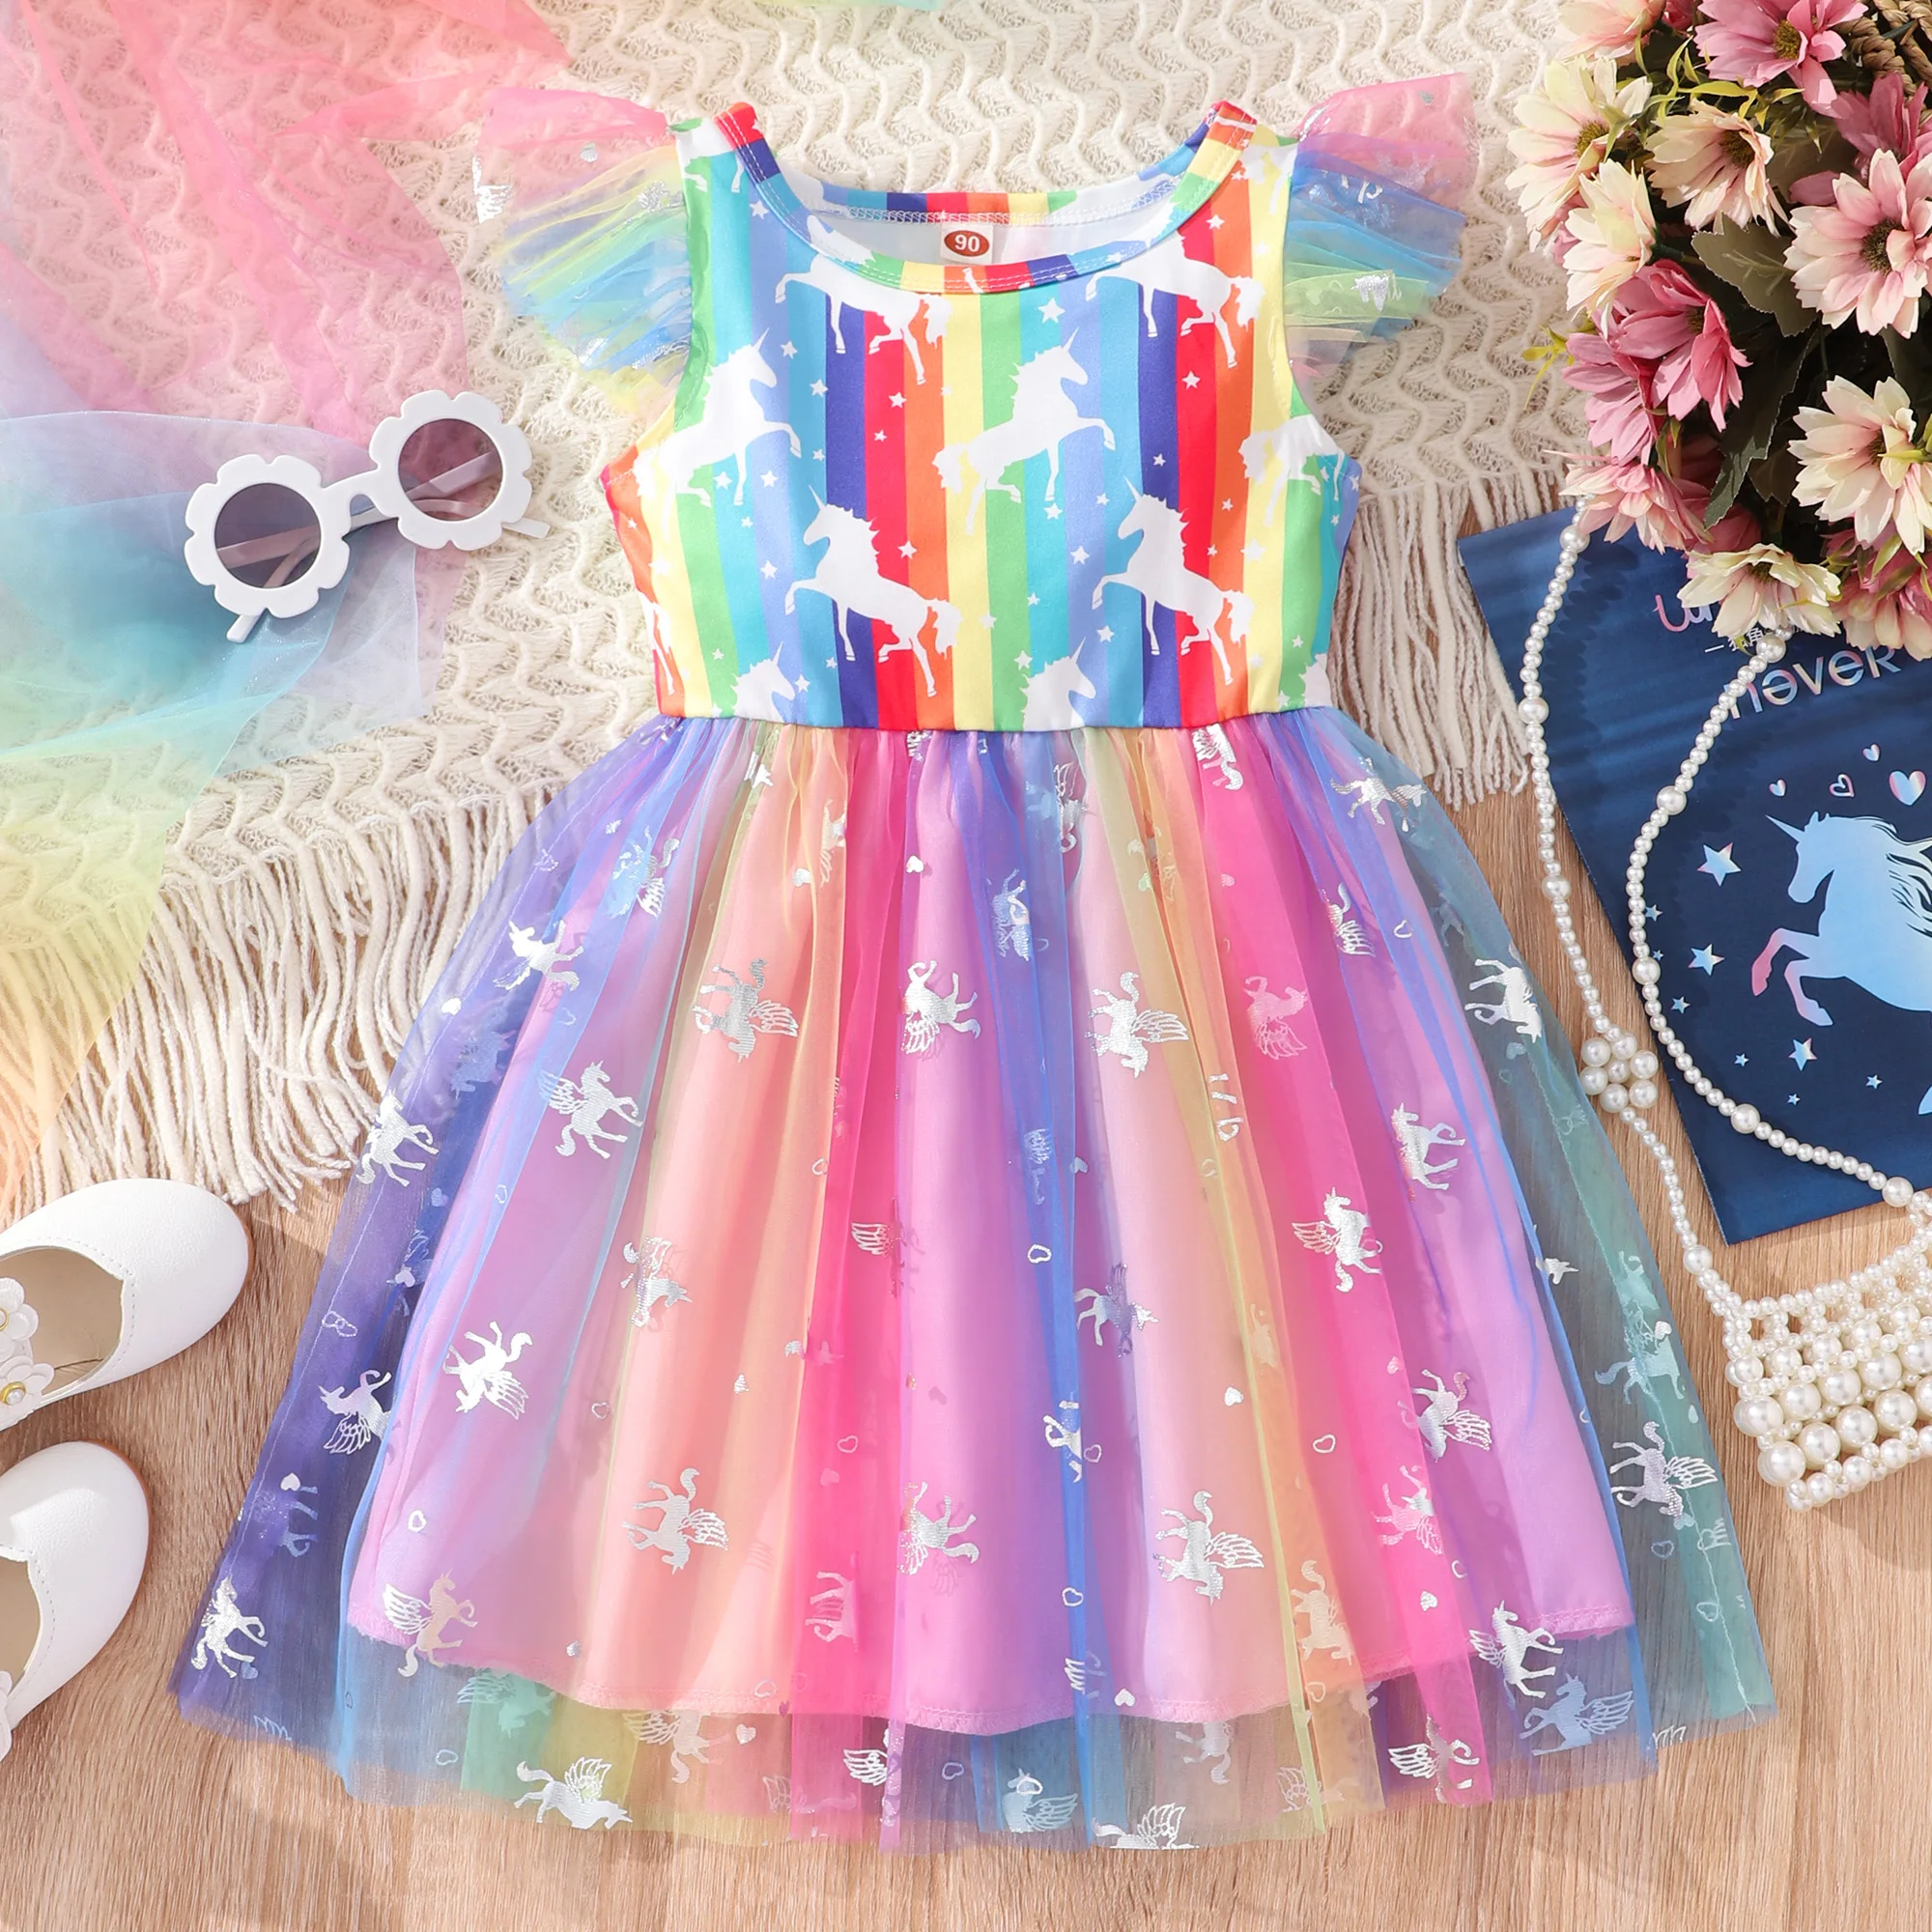 

Kids Clothes Girls Dresses Summer Ruffle Flying Sleeve Cute Rainbow Printed Tutu Party Pretty Fashion Princess Dress for 1-7Y